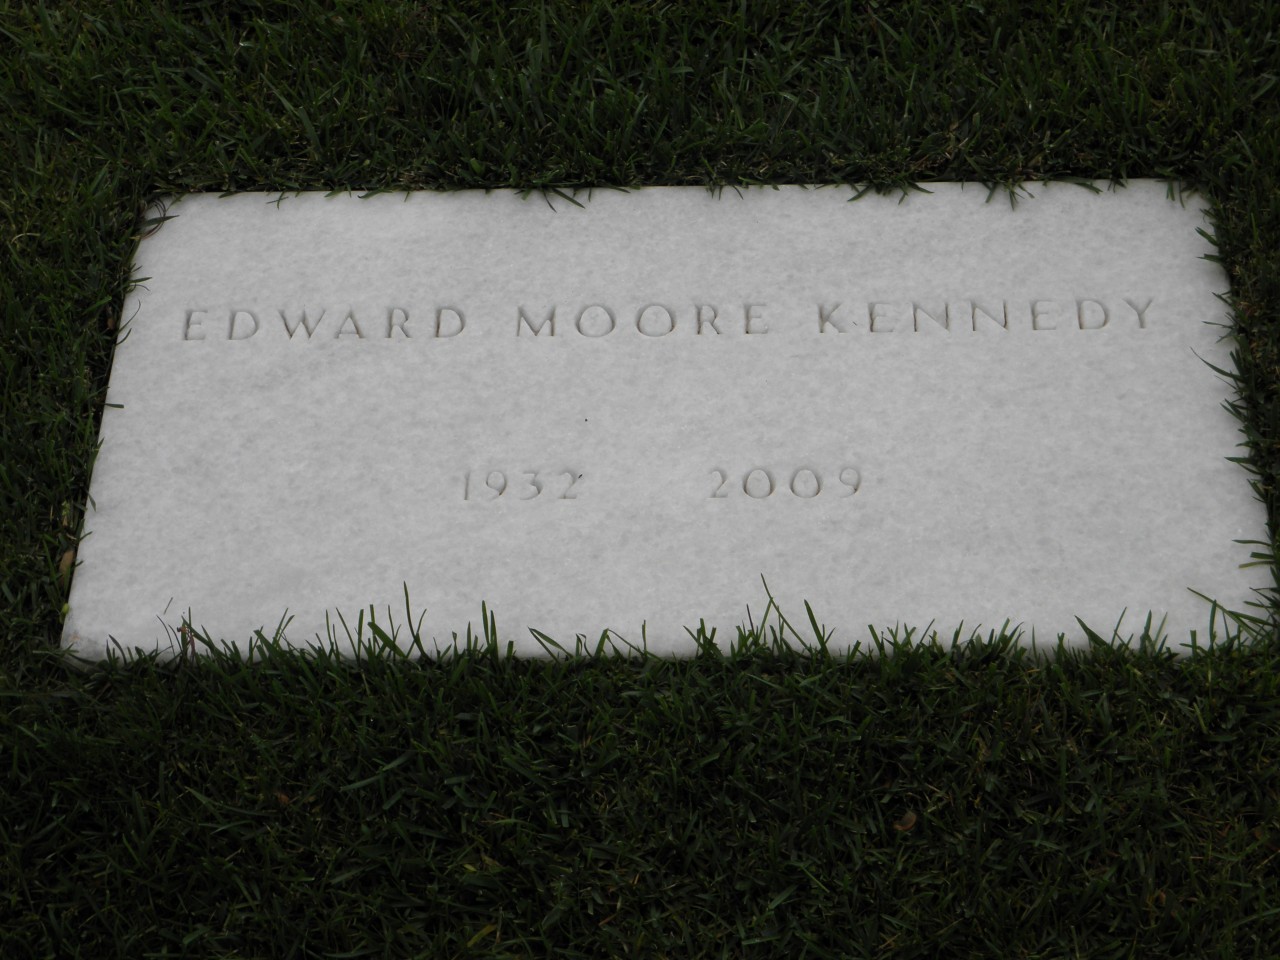 Arlington National Cemetery – Edward Moore Kennedy